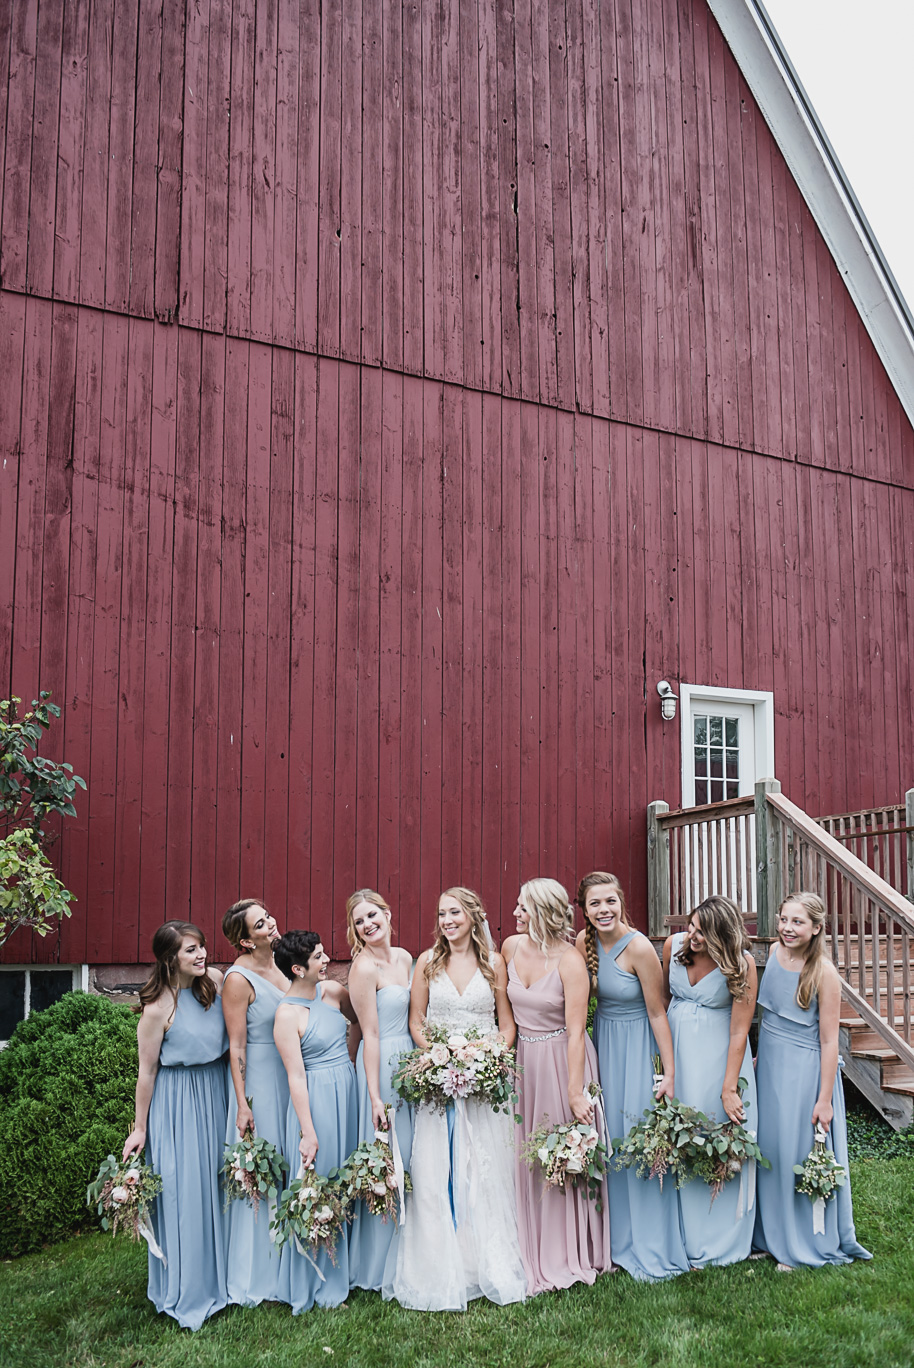 Nixon Farms Rustic Barn Wedding-56